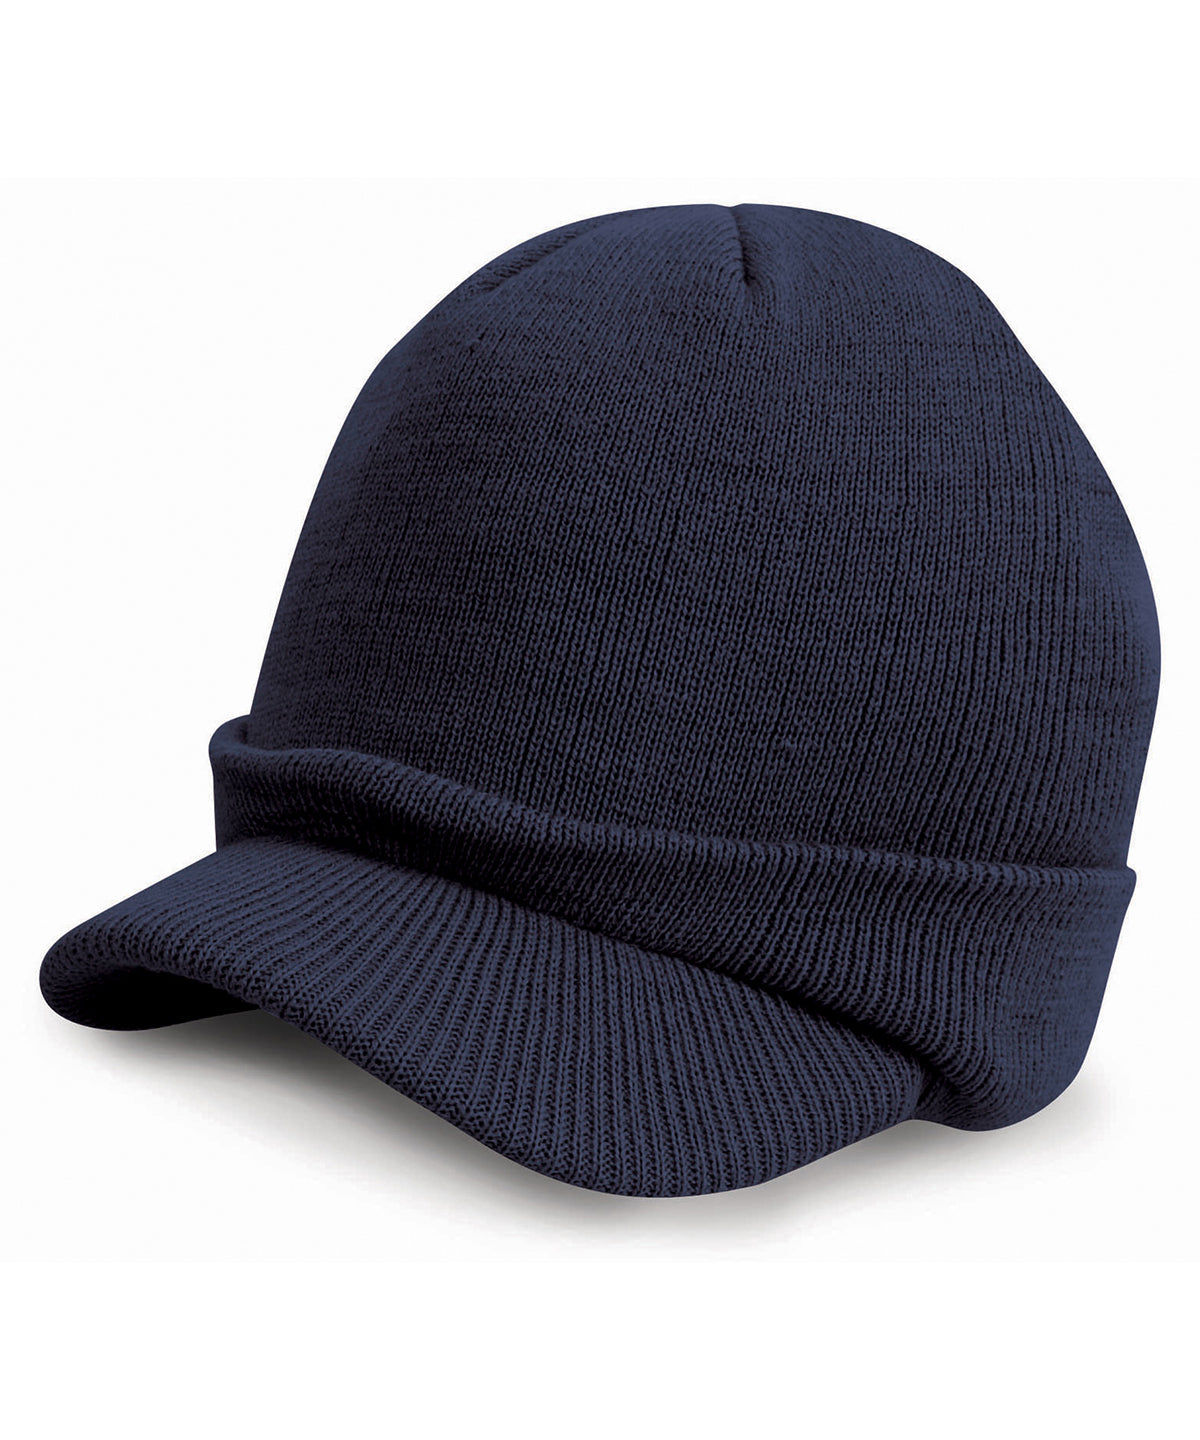 Húfur - Esco Army Knitted Hat